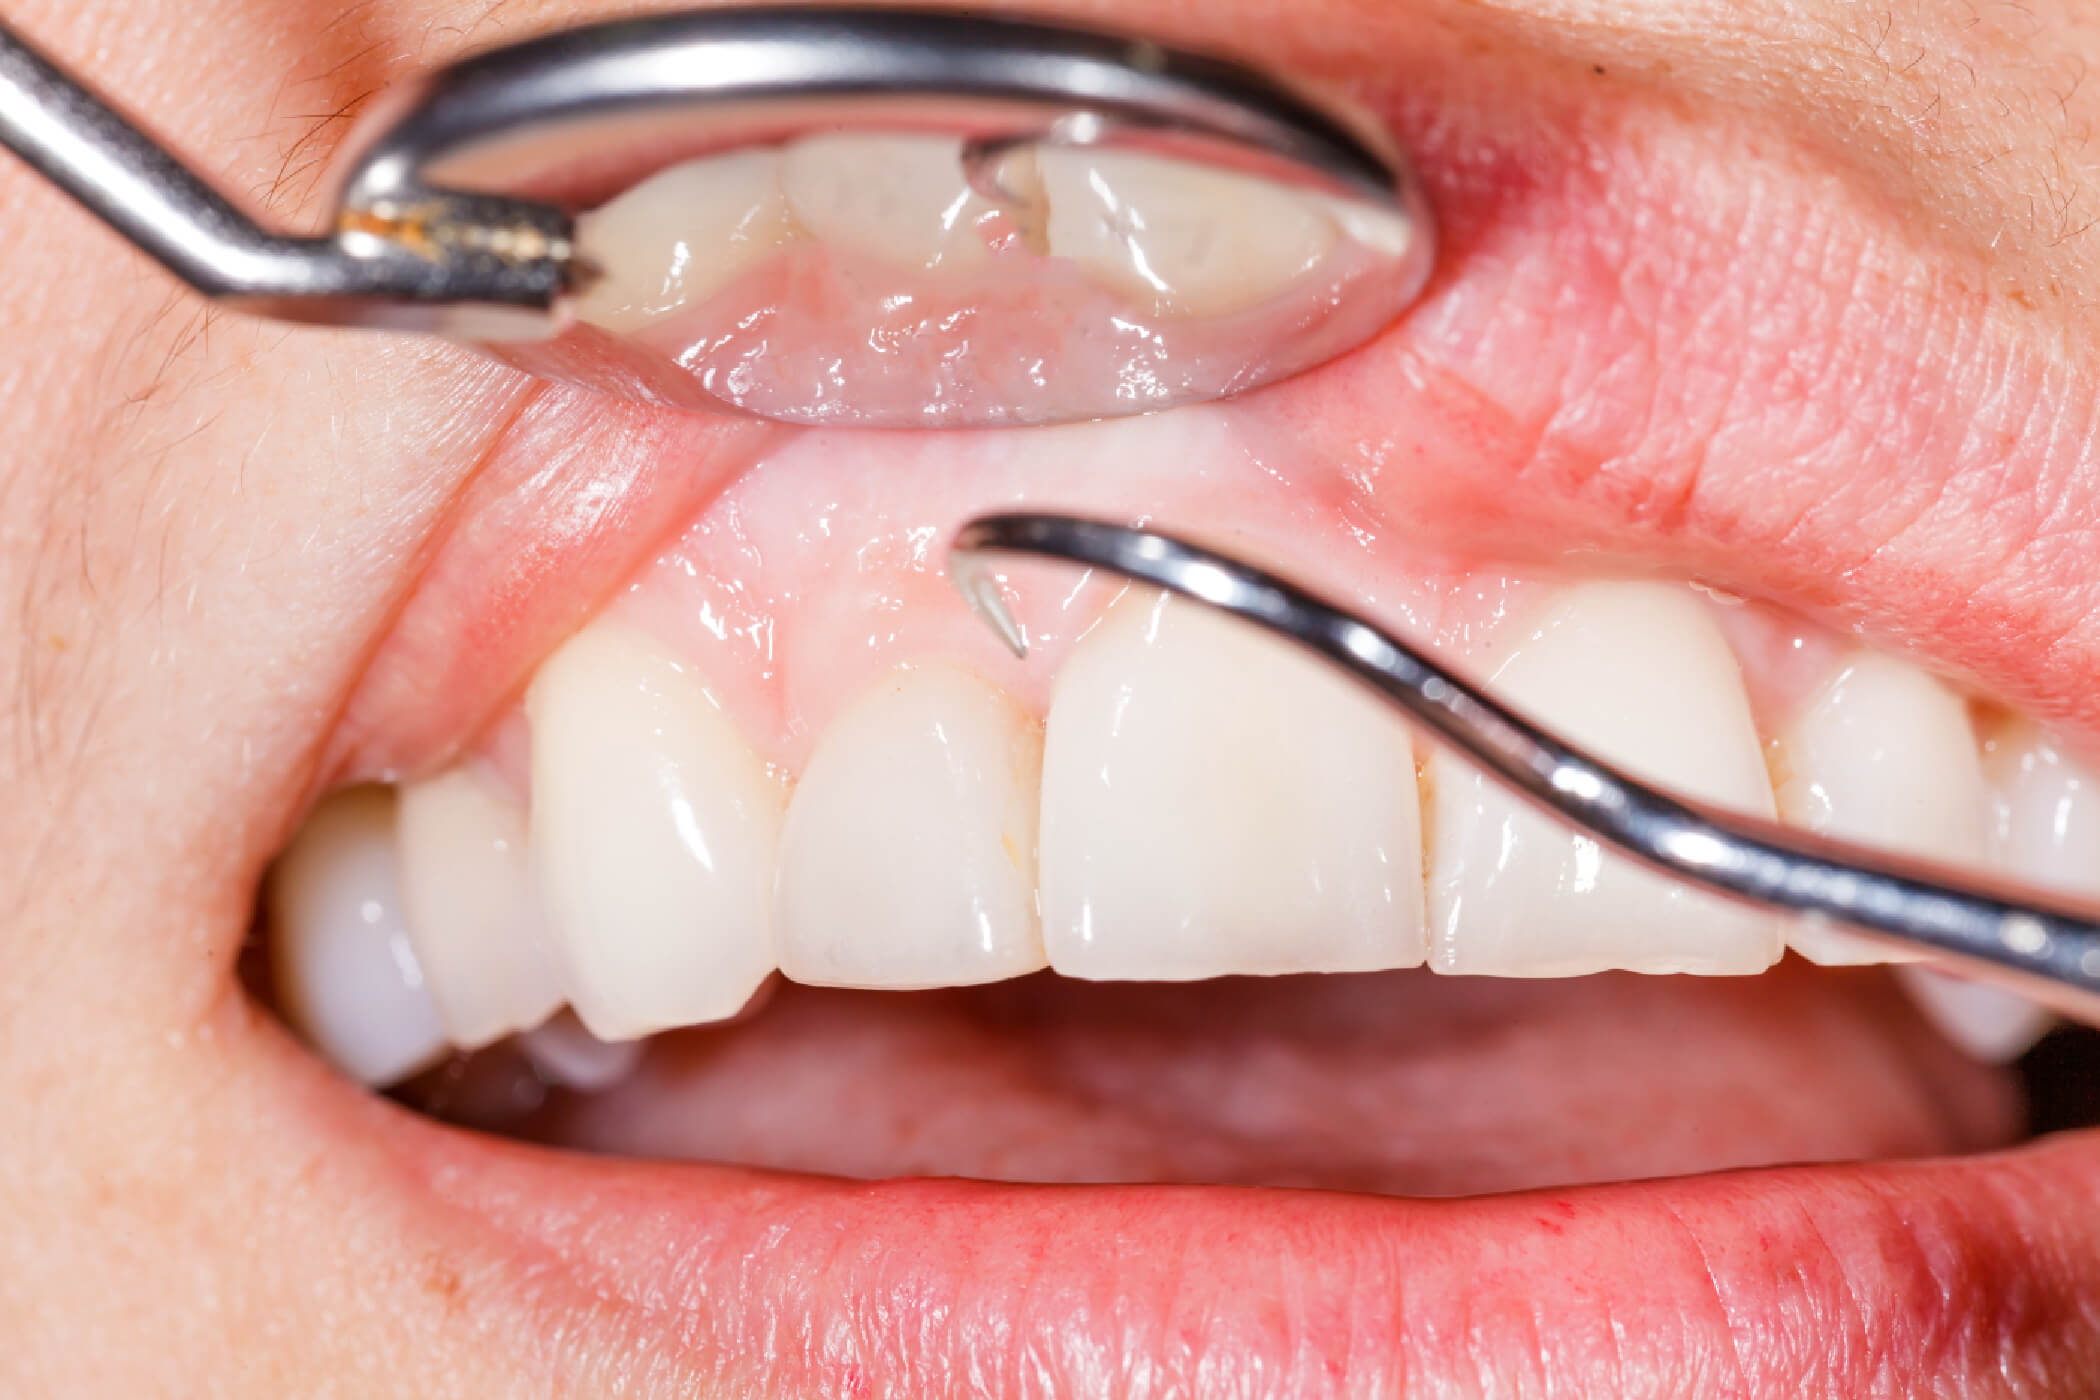 How To Prevent Gum Disease